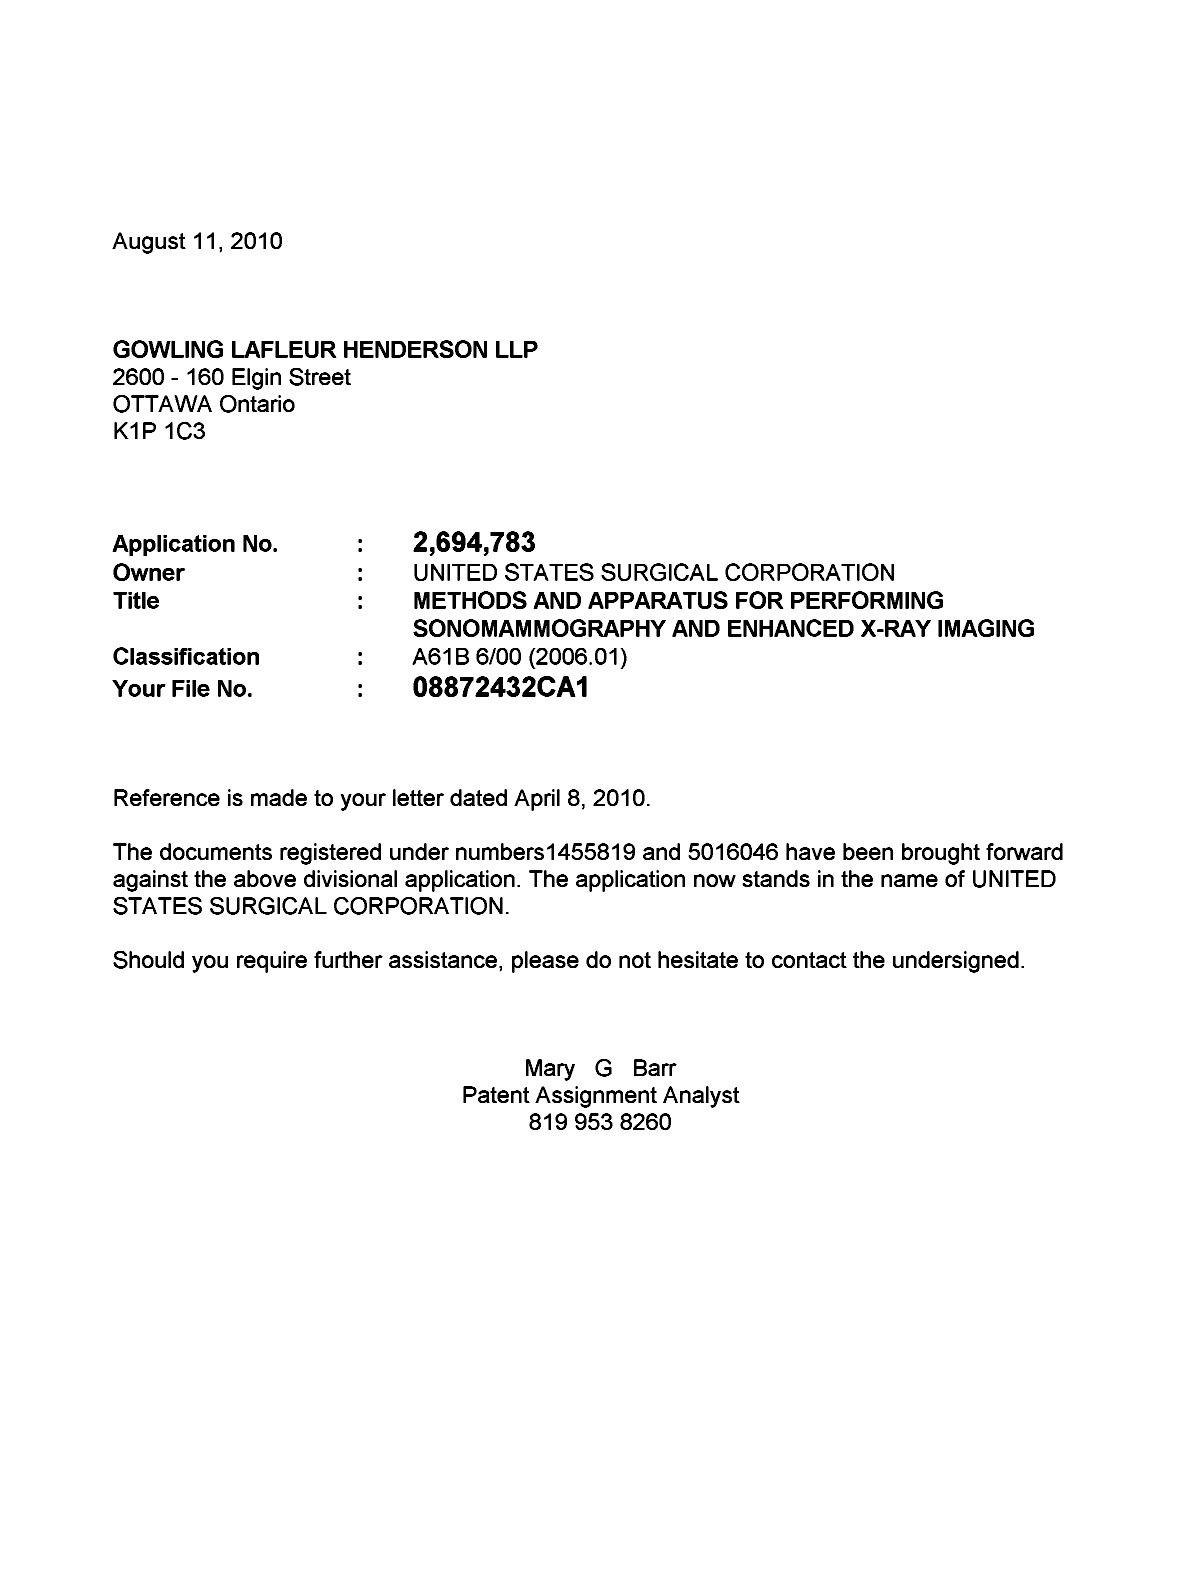 Canadian Patent Document 2694783. Correspondence 20100811. Image 1 of 1